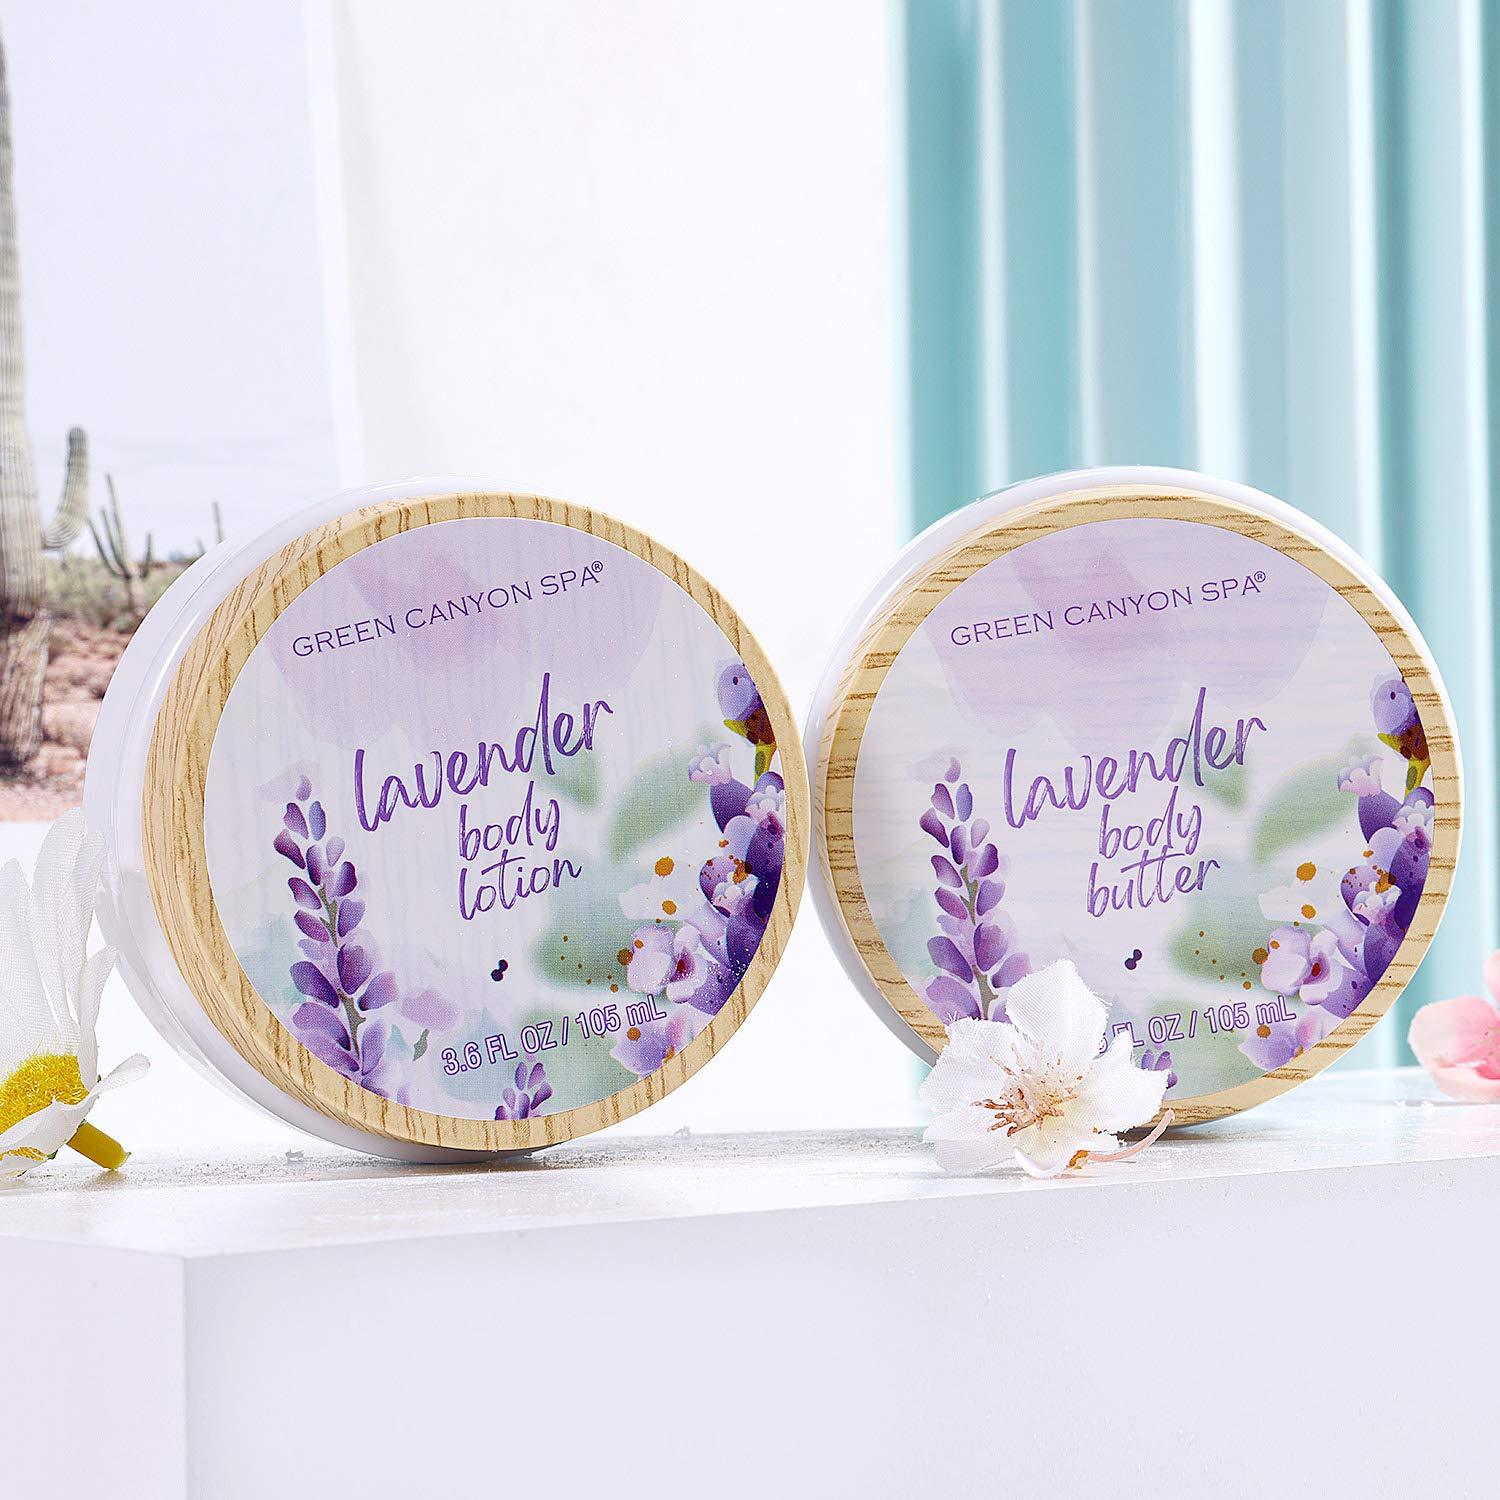 Green Canyon Spa Gift Sets Lavender Bath Set